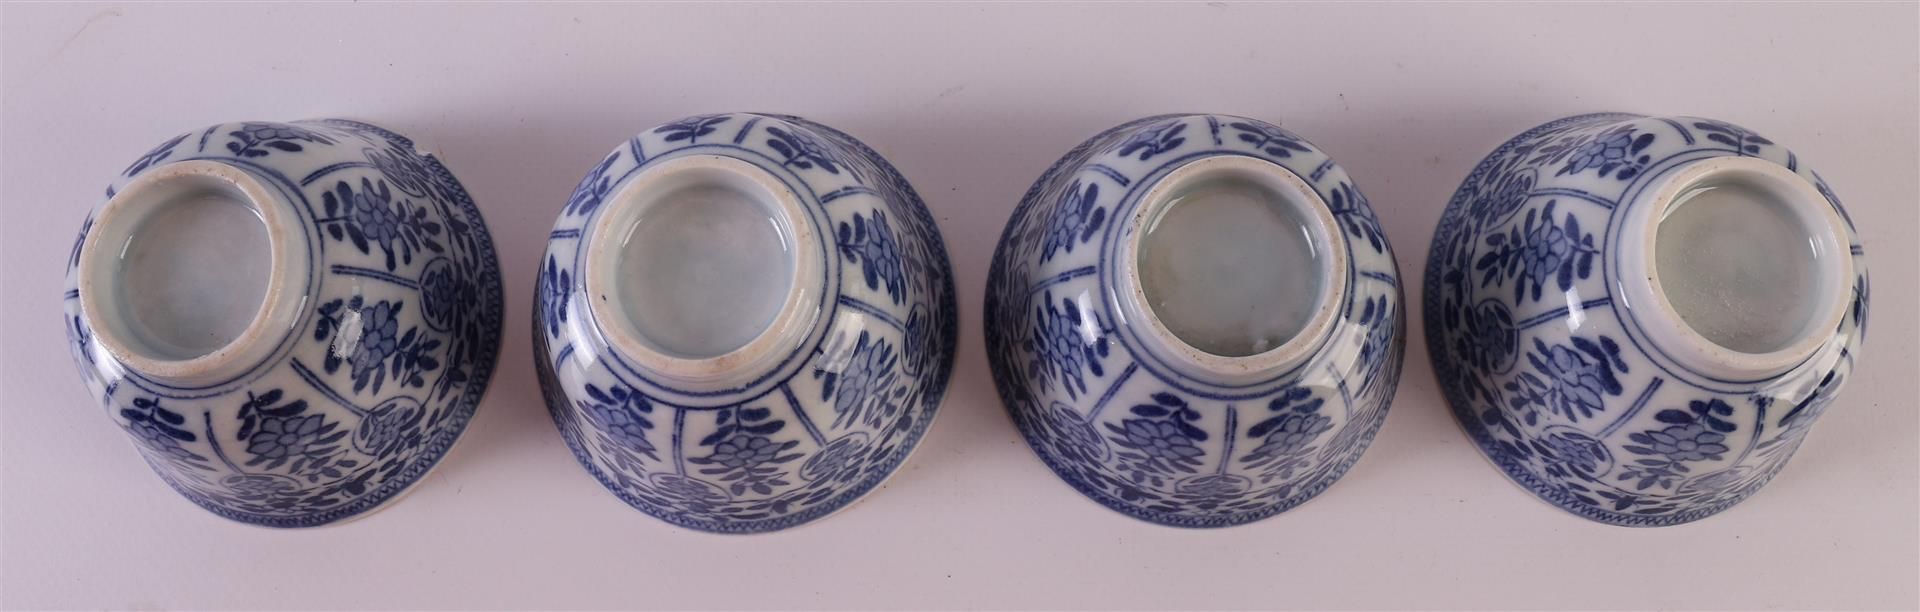 Twelve blue/white porcelain cups and saucers, China, late 19th century. Blue underglaze floral - Bild 19 aus 20